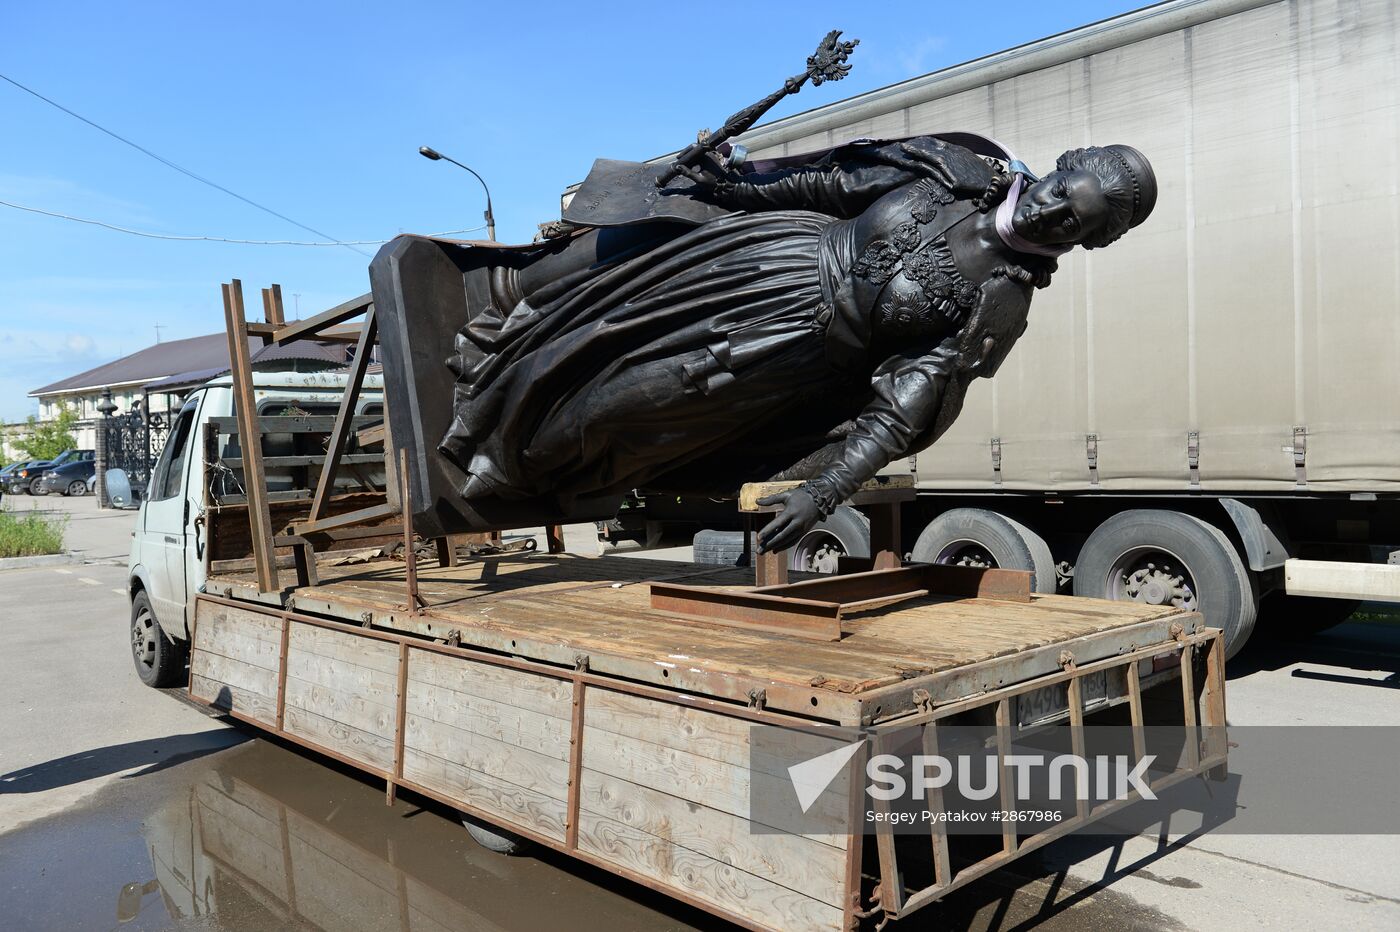 Empress Catherine the Great statue sent to Crimea